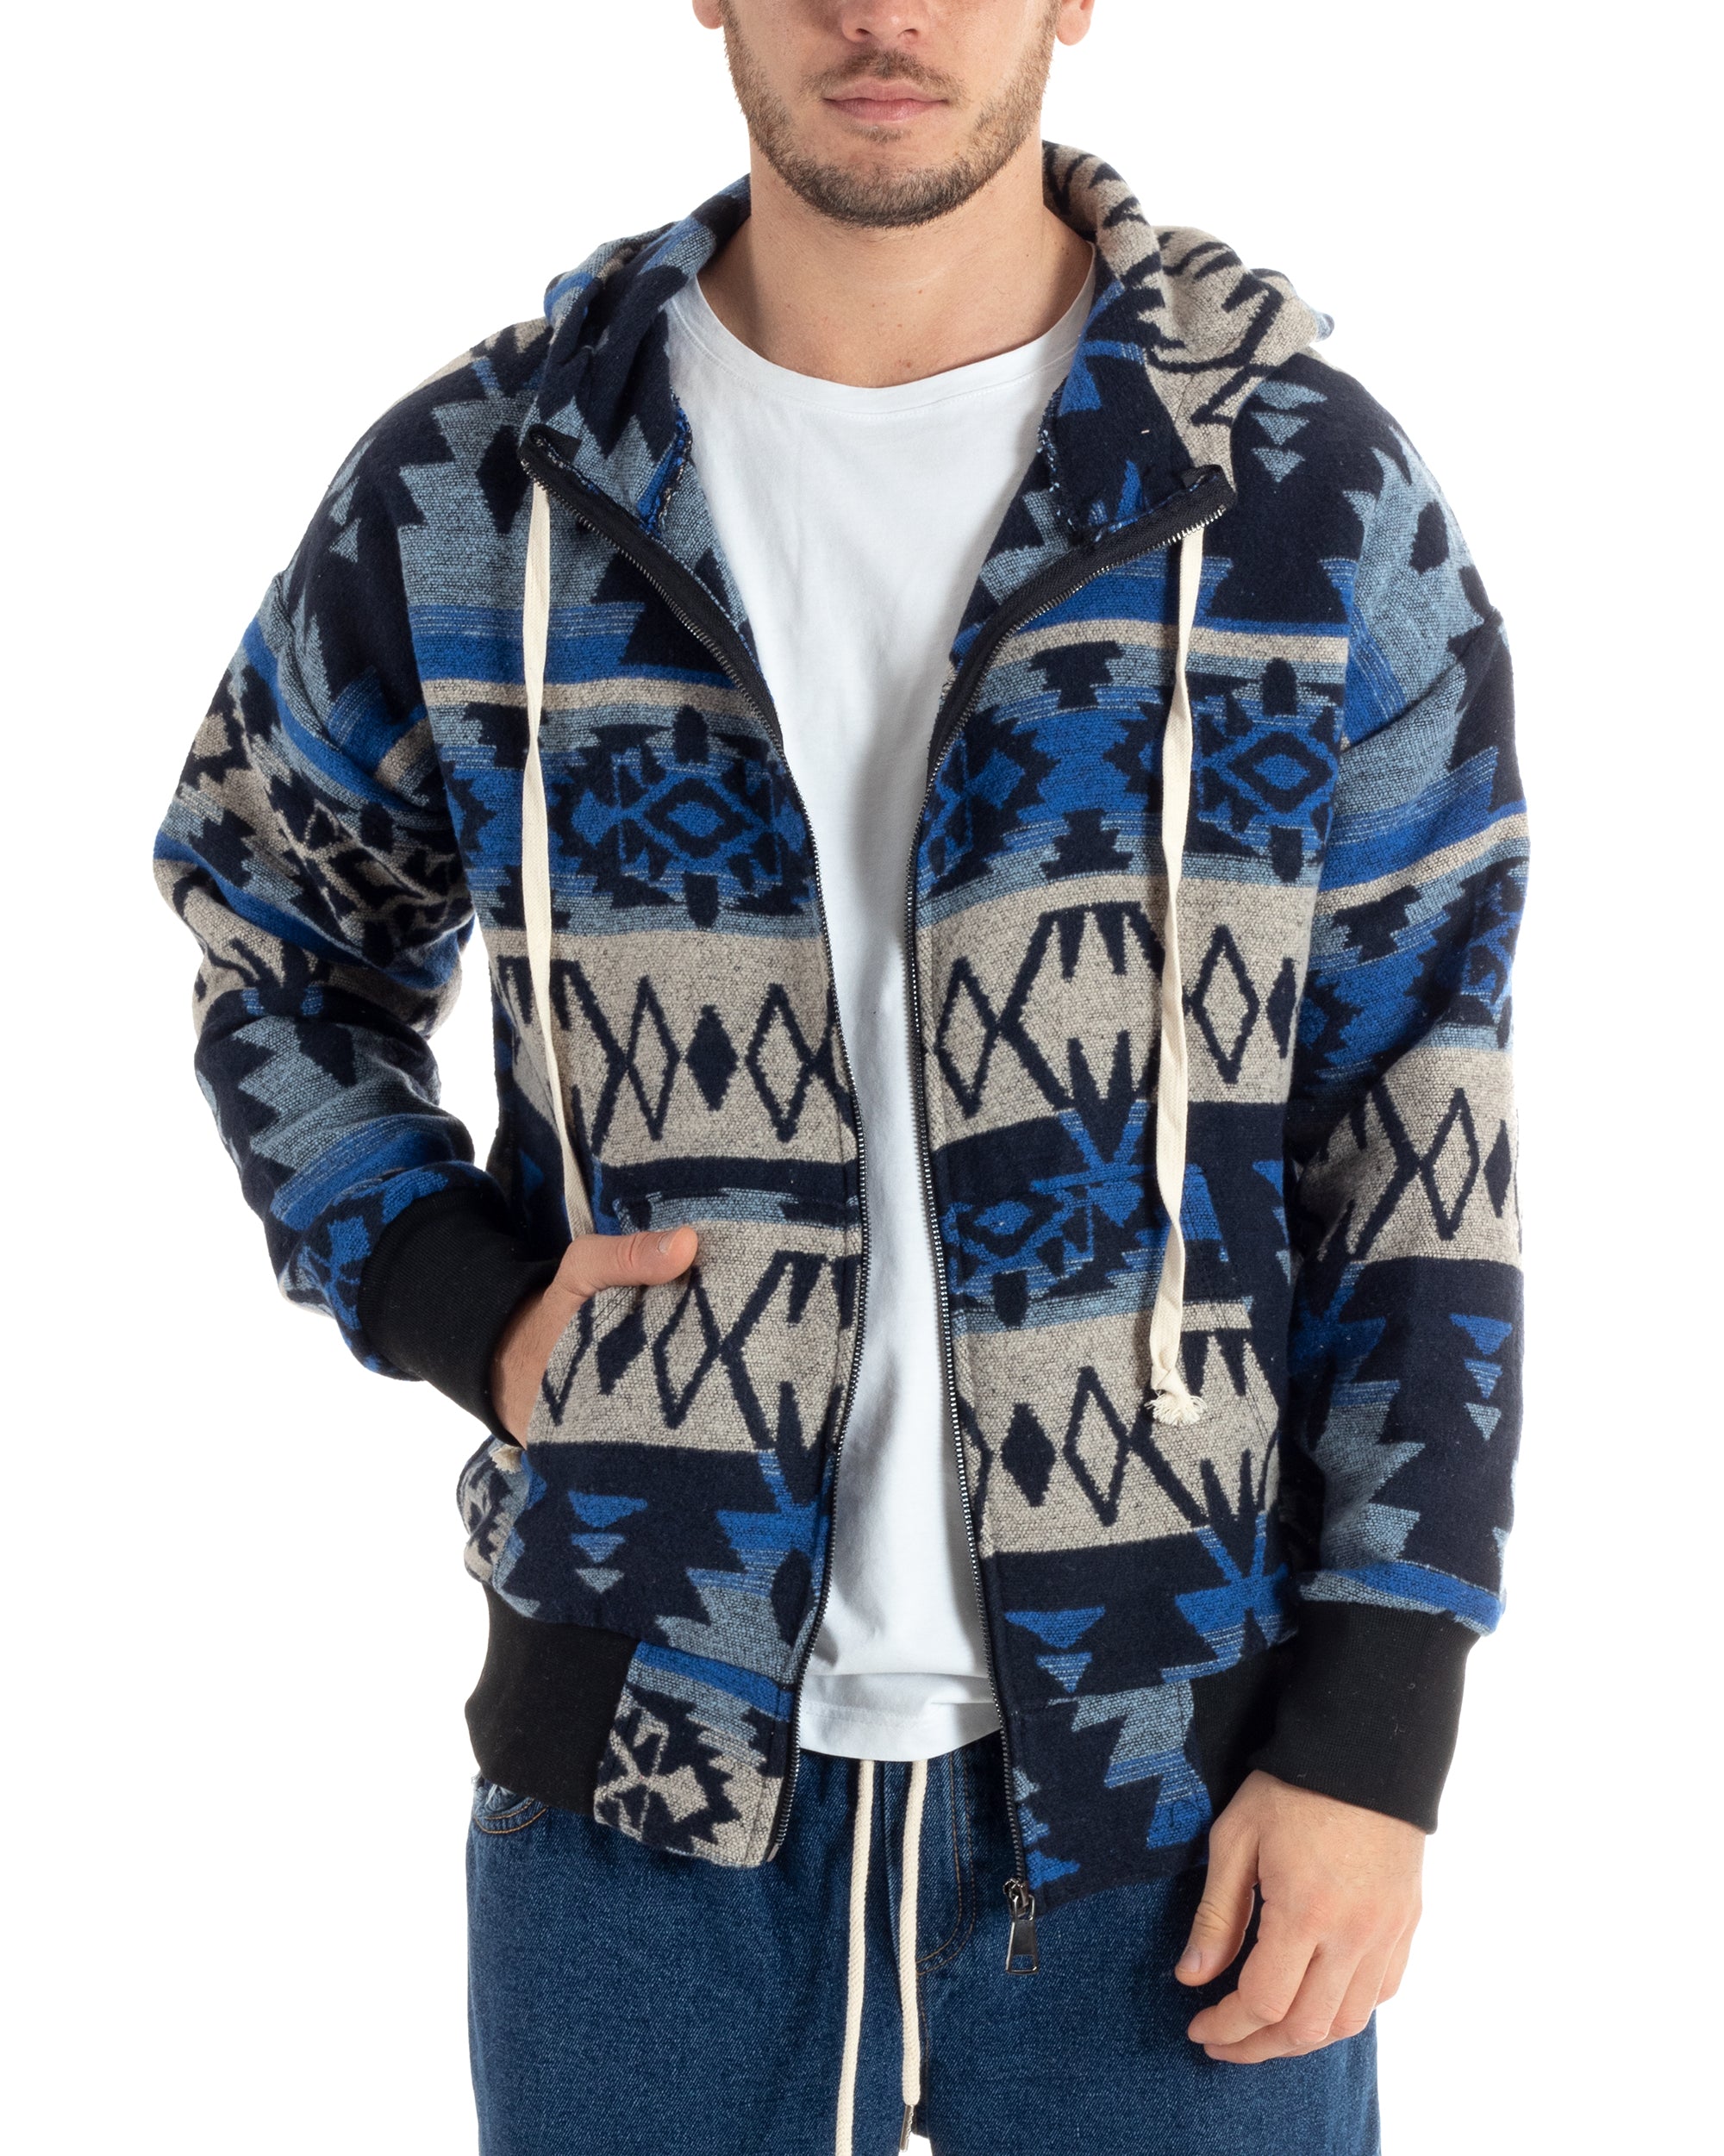 Coat Jacket Men Shirt Shirt With Hood Casual Blue Pattern GIOSAL-G2924A